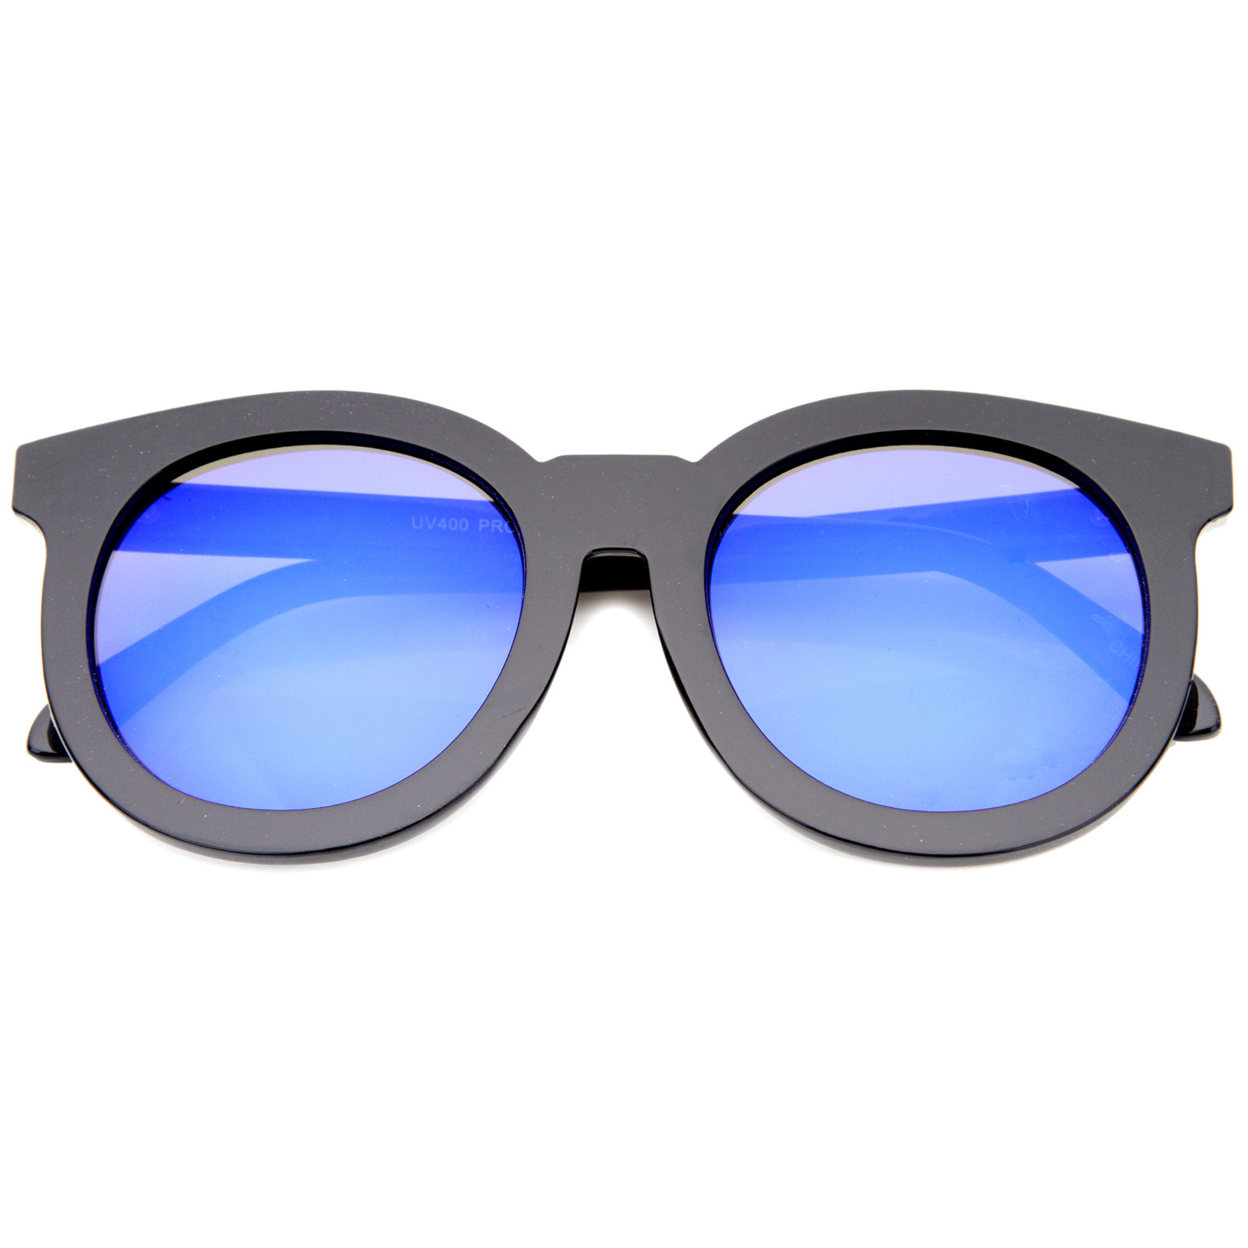 Women's Fashion Oversized Flash Mirrored Flat Lens Round Sunglasses 64mm - Shiny White-Gold / Blue Mirror